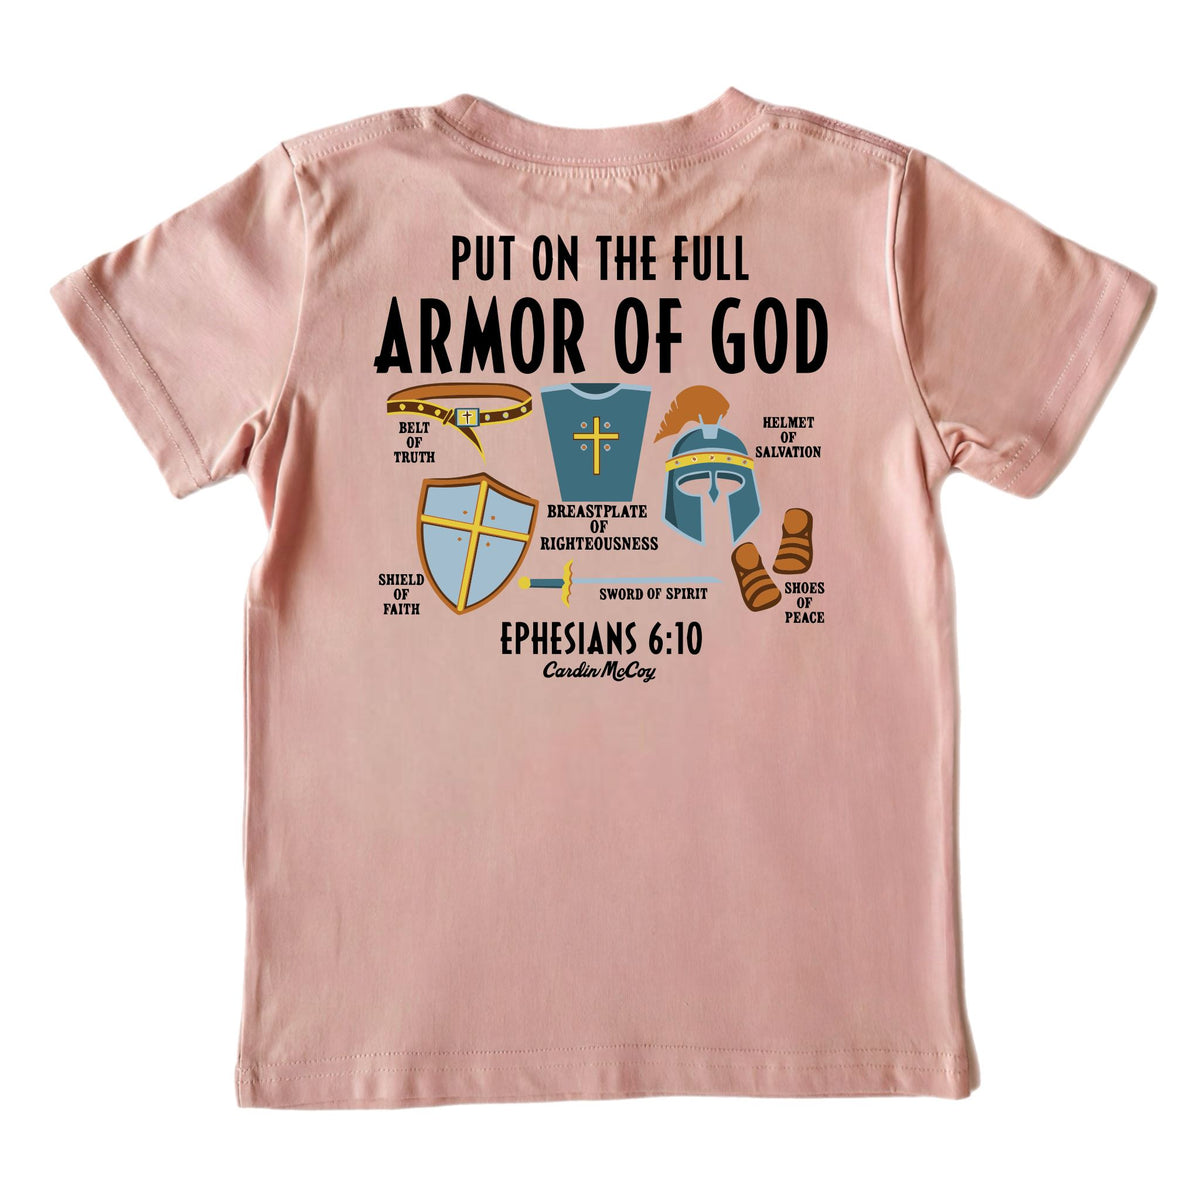 Kids' Armor of God Short-Sleeve Tee Short Sleeve T-Shirt Cardin McCoy Rose Tan XXS (2/3) Pocket